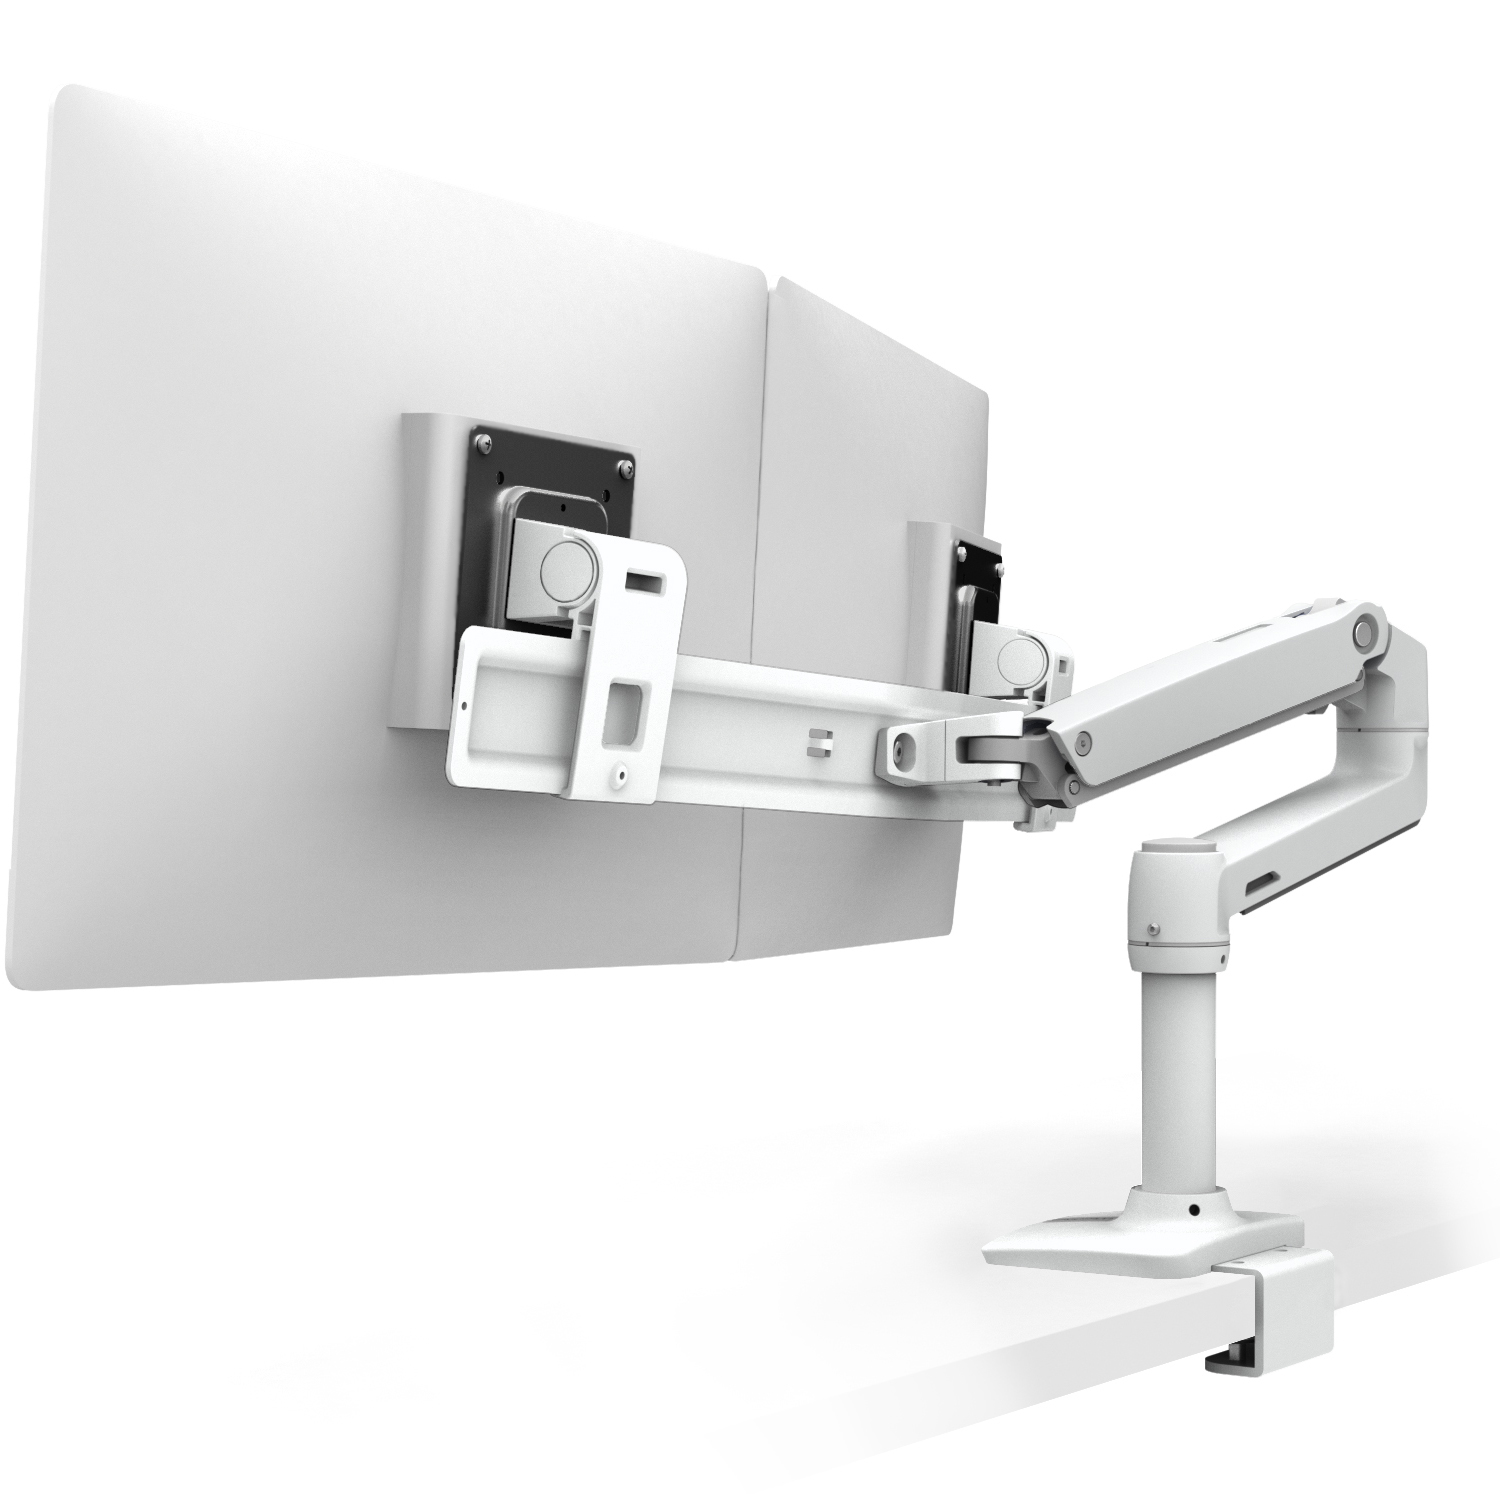  Ergotron – LX Dual Direct Monitor Arm, VESA Desk Mount